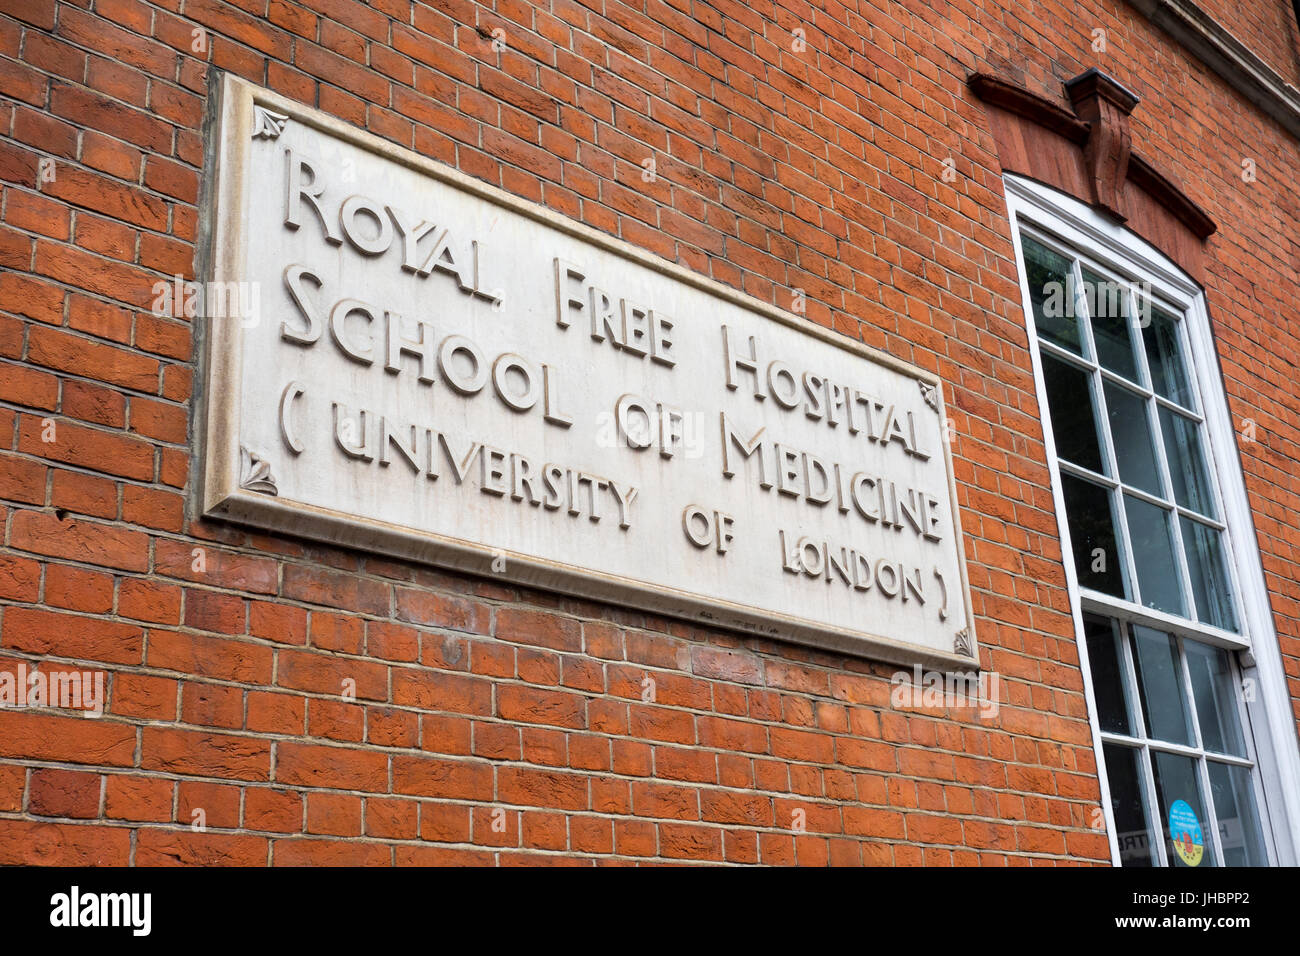 University of London, Royal Free Hospital, School of Medicine, London, UK Stock Photo